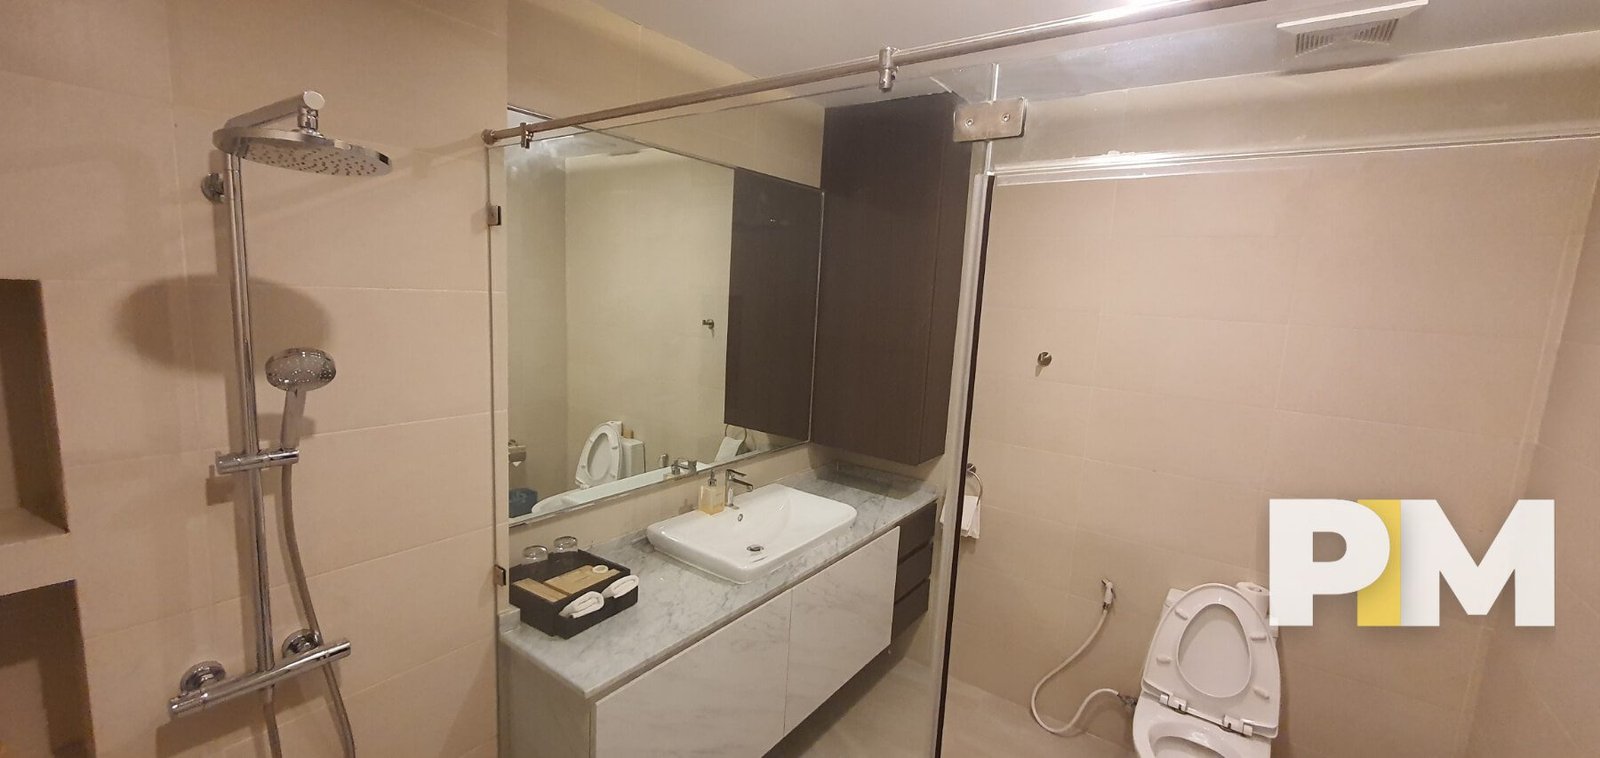 Tiolet room with sink - Myanmar Real Estate